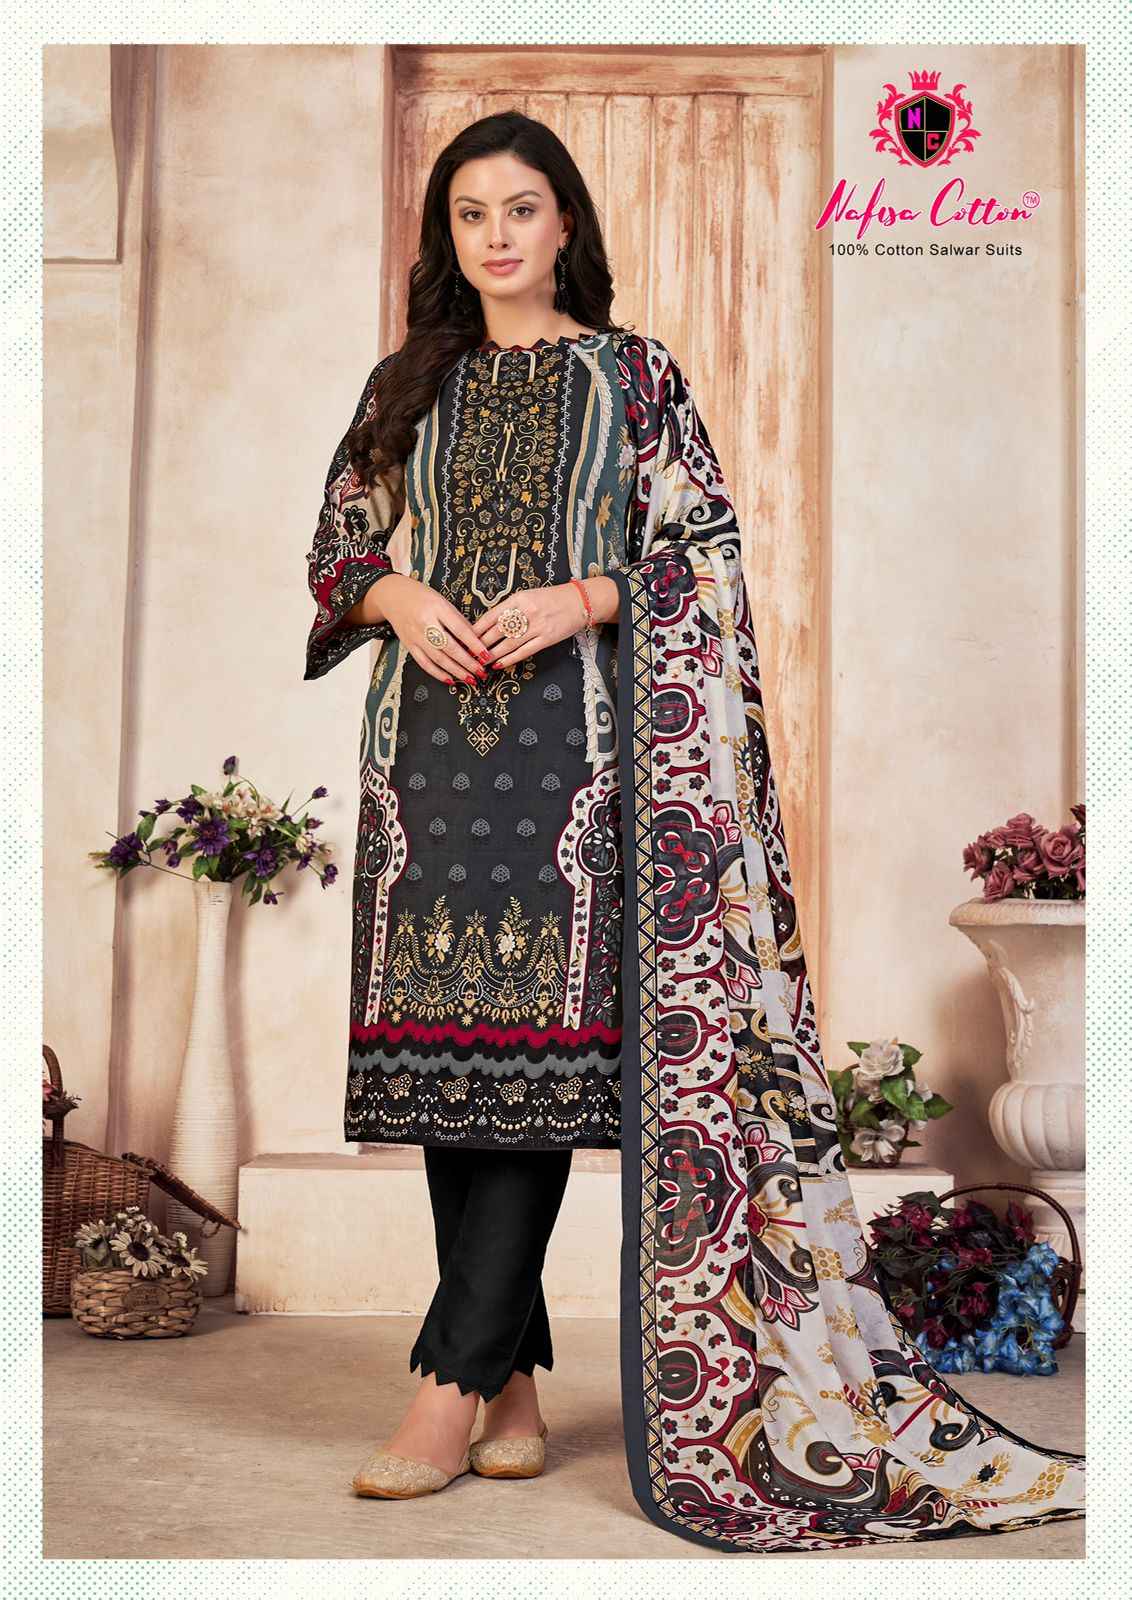 Madhav Riwaaz Vol 7 Karachi Cotton Pakistani Dress Material Collection